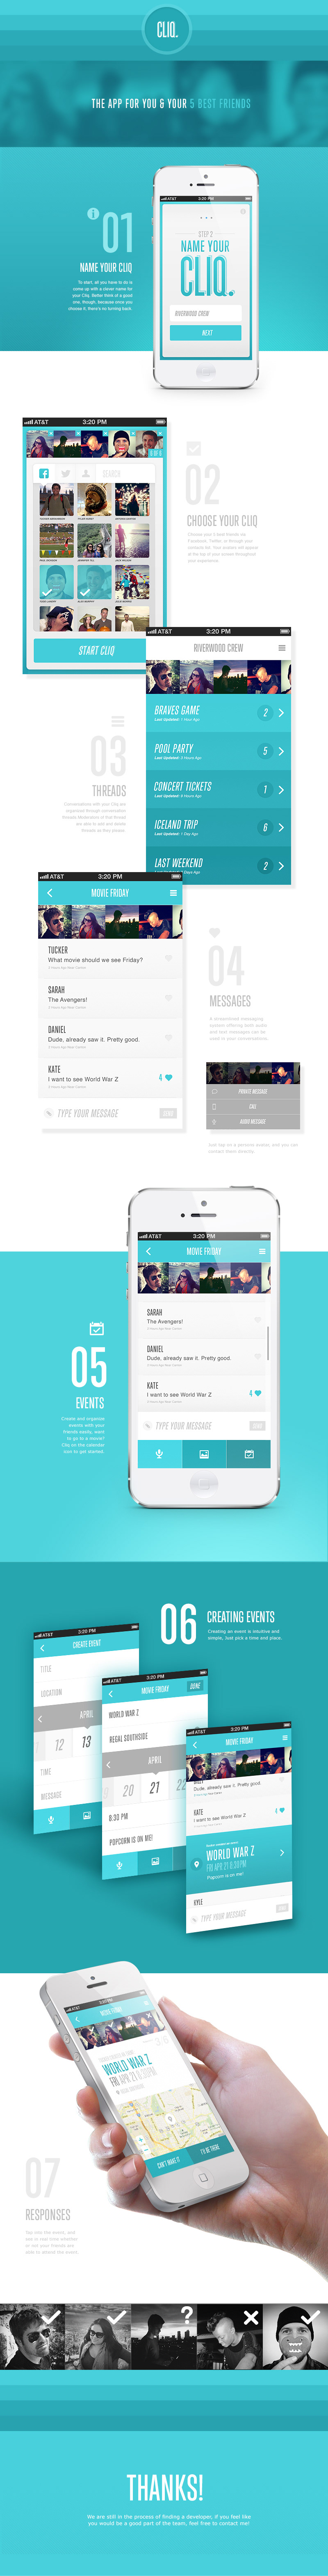 cliq Social Networking app iphone android five messaging Events best friends friends UI app design design